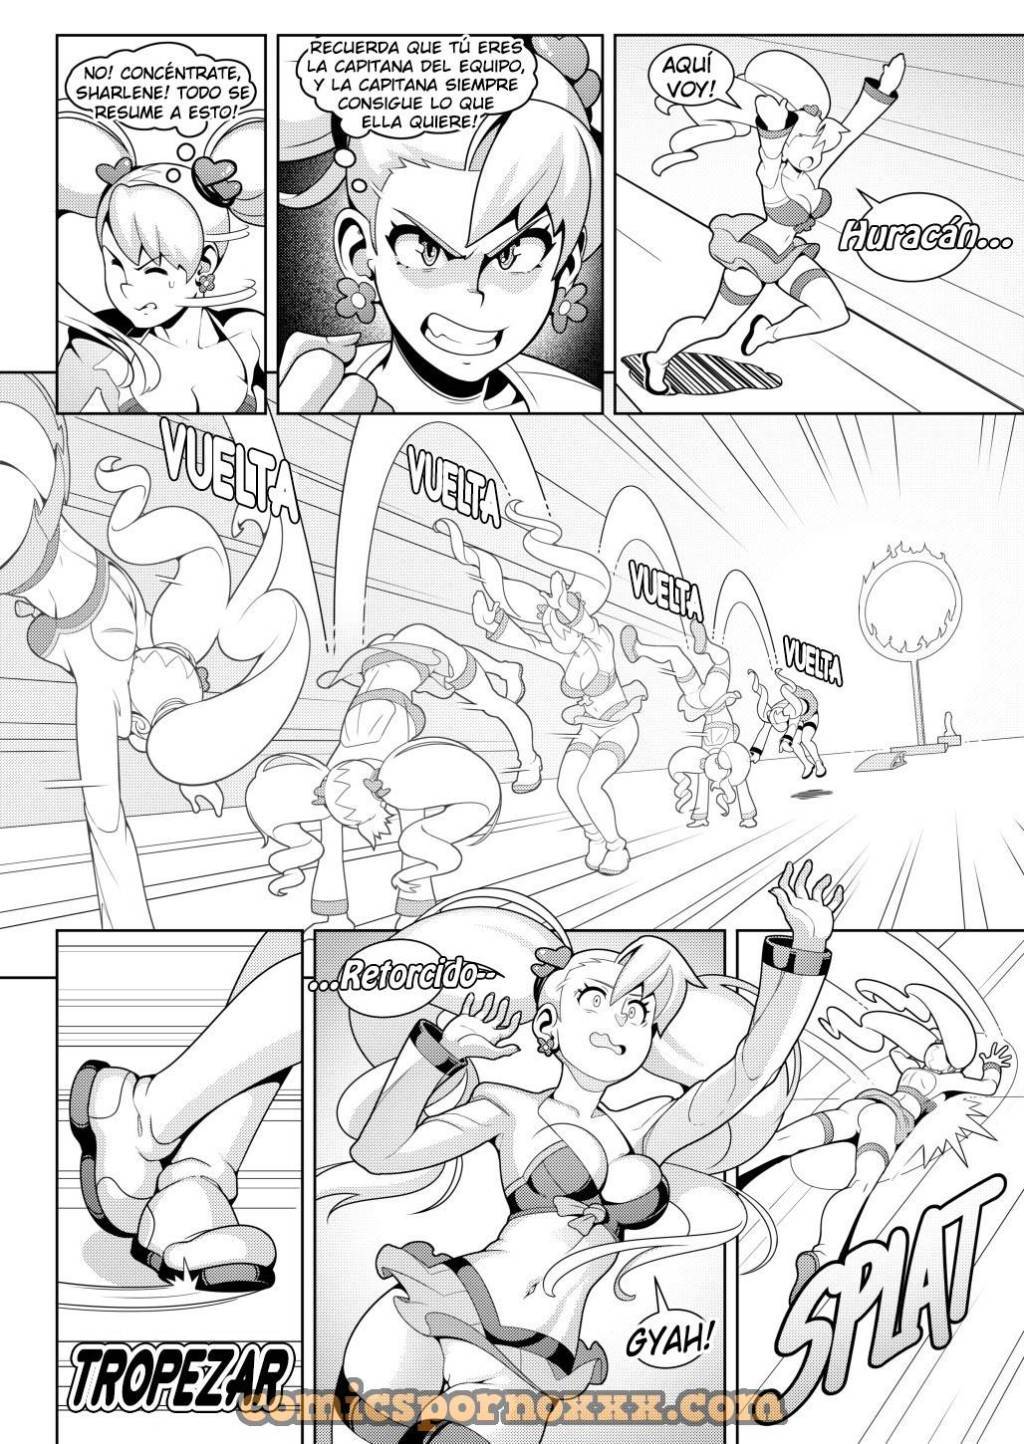 Hot Shit High! #2 - 4 - Comics Porno - Hentai Manga - Cartoon XXX